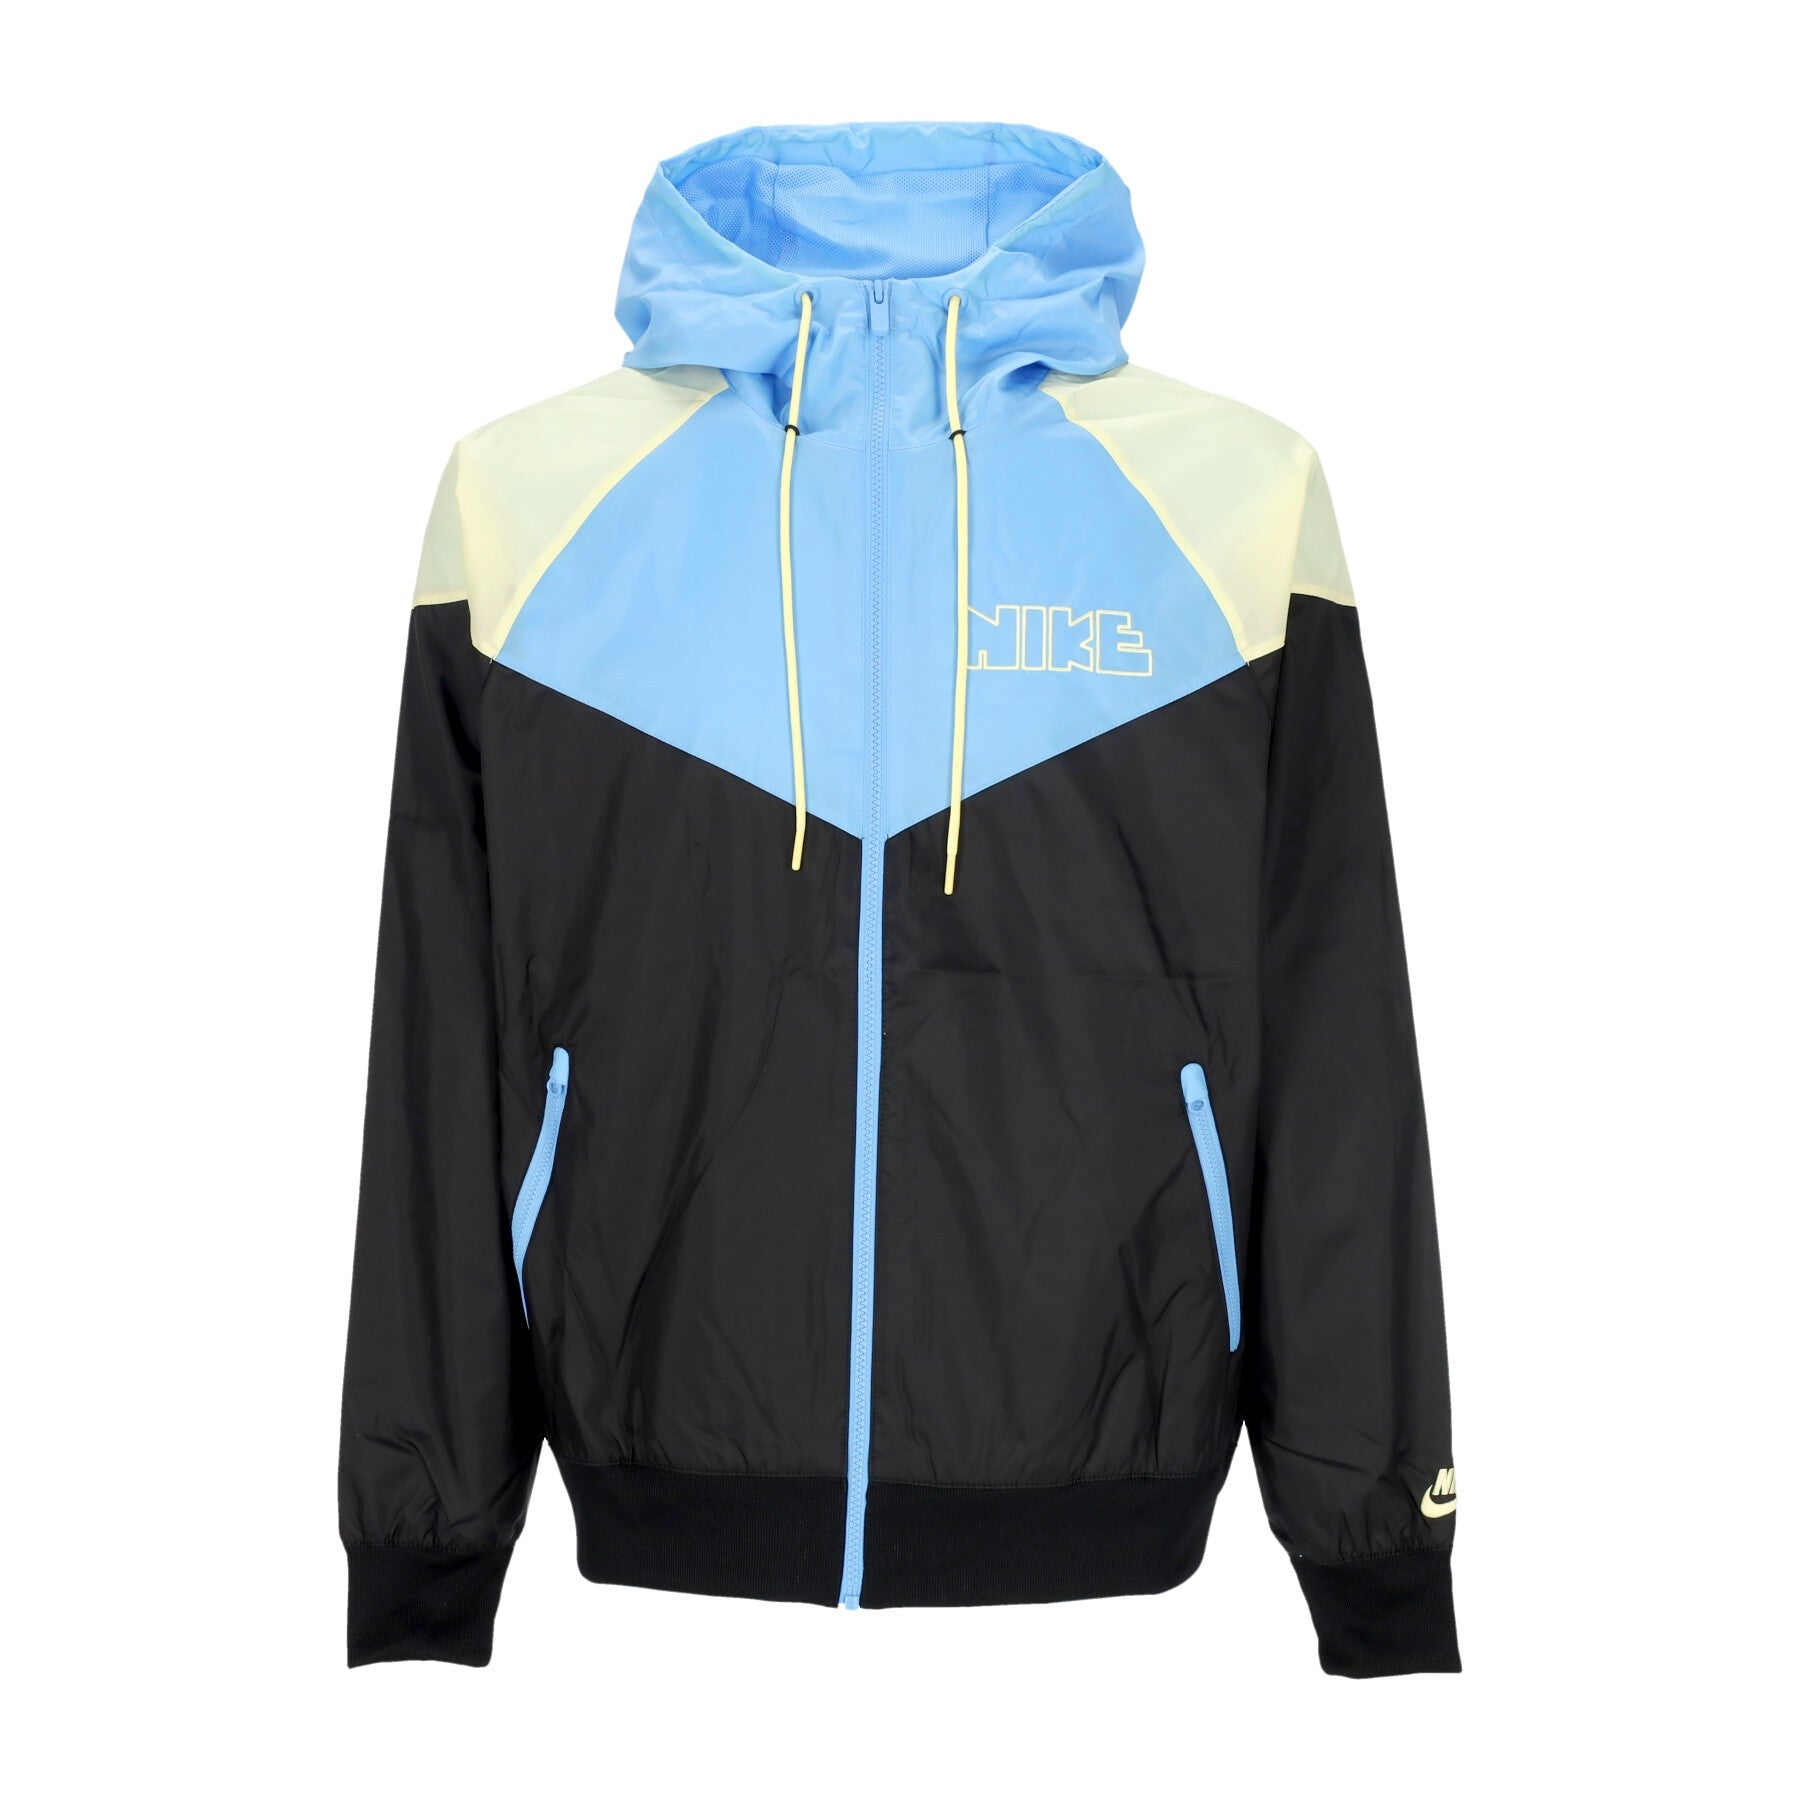 Nike, Giacca A Vento Uomo Windrunner Woven Lined Jacket, Black/university Blue/lemon Chiffon